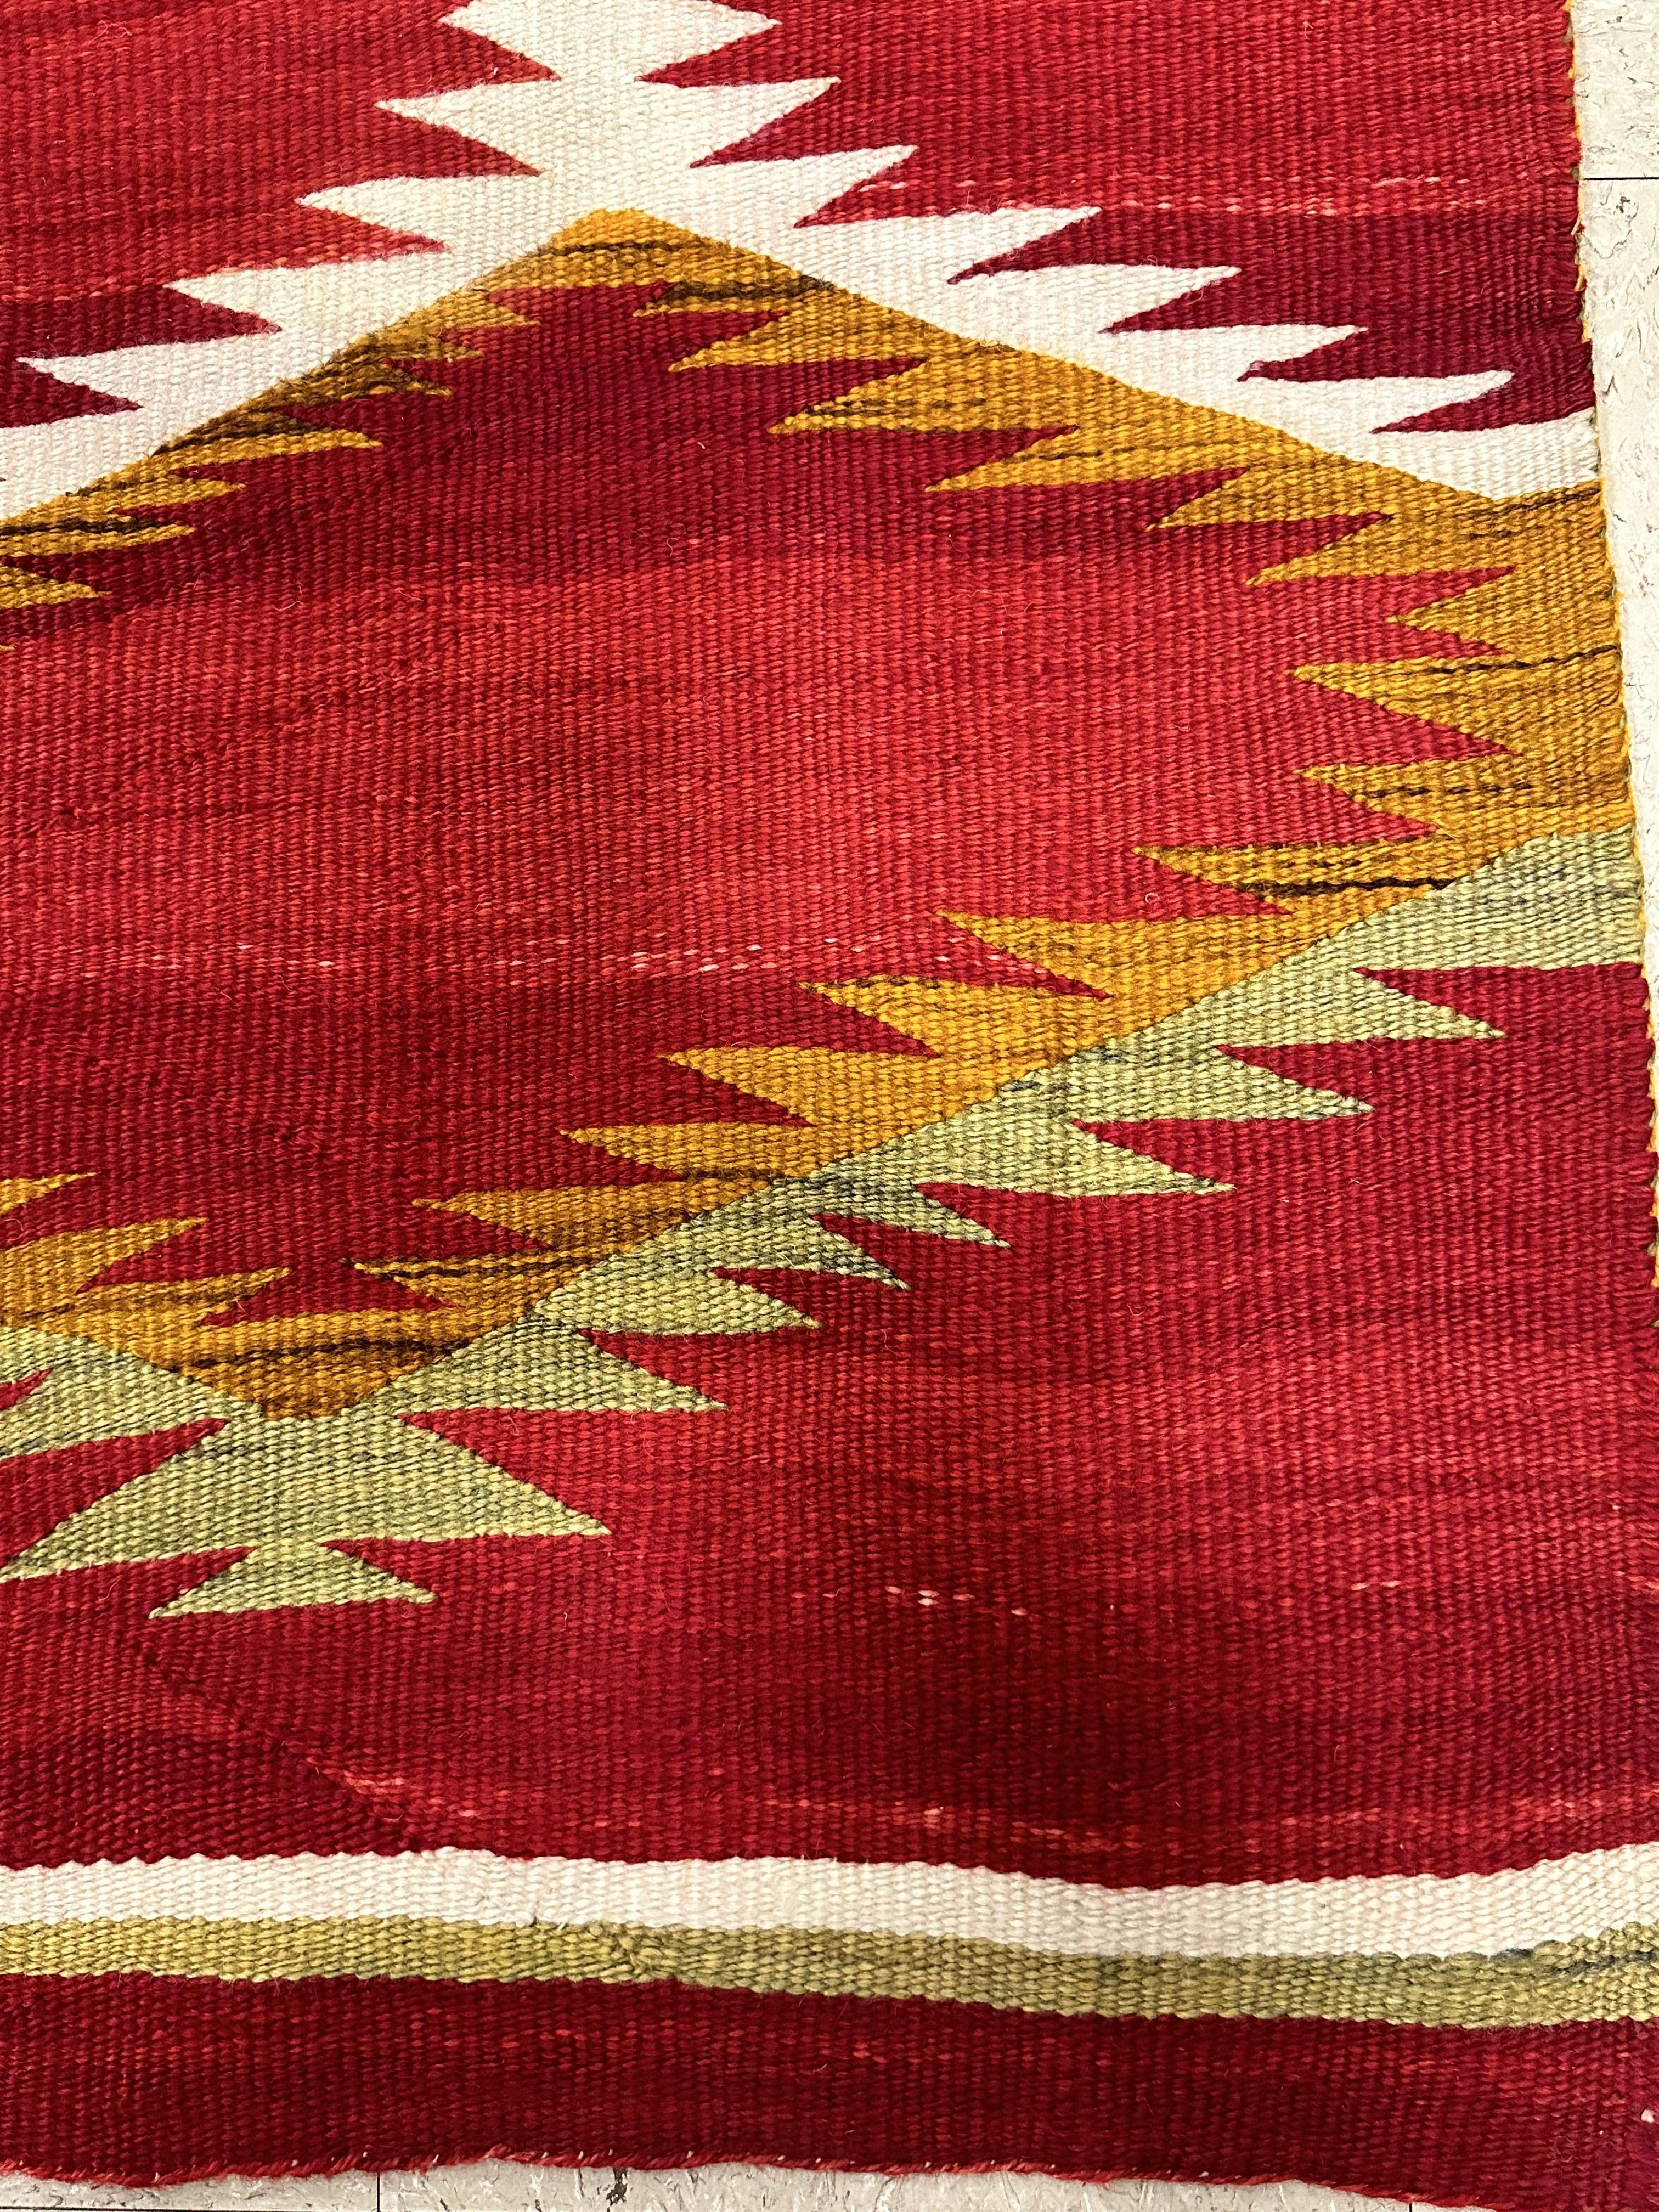 Hand-Painted Antique Navajo Carpet, Folk Rug, Handmade Wool, Red, Black, White, Green For Sale